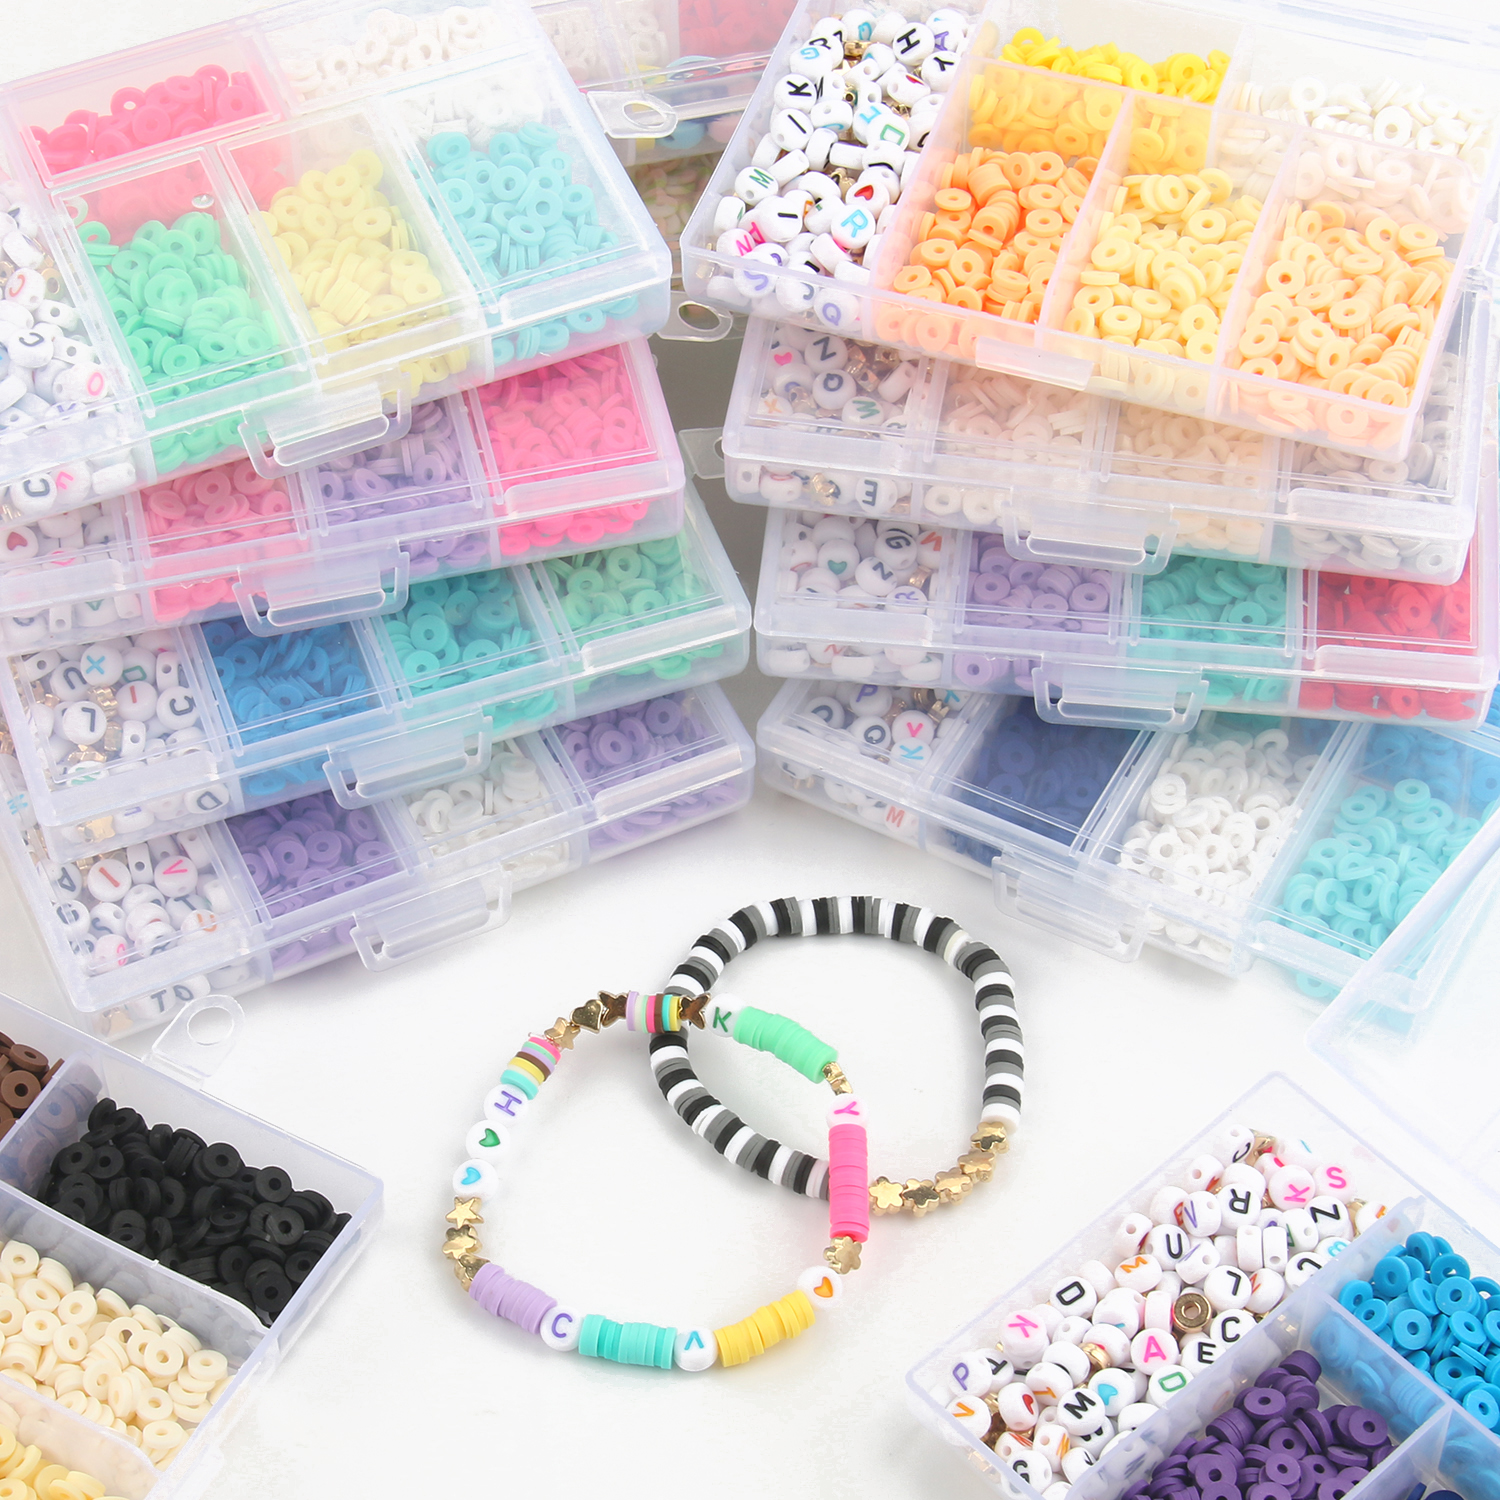 85 Pcs Charm Bracelet Making Kit DIY Charm Bracelet Beads for Adults Kids